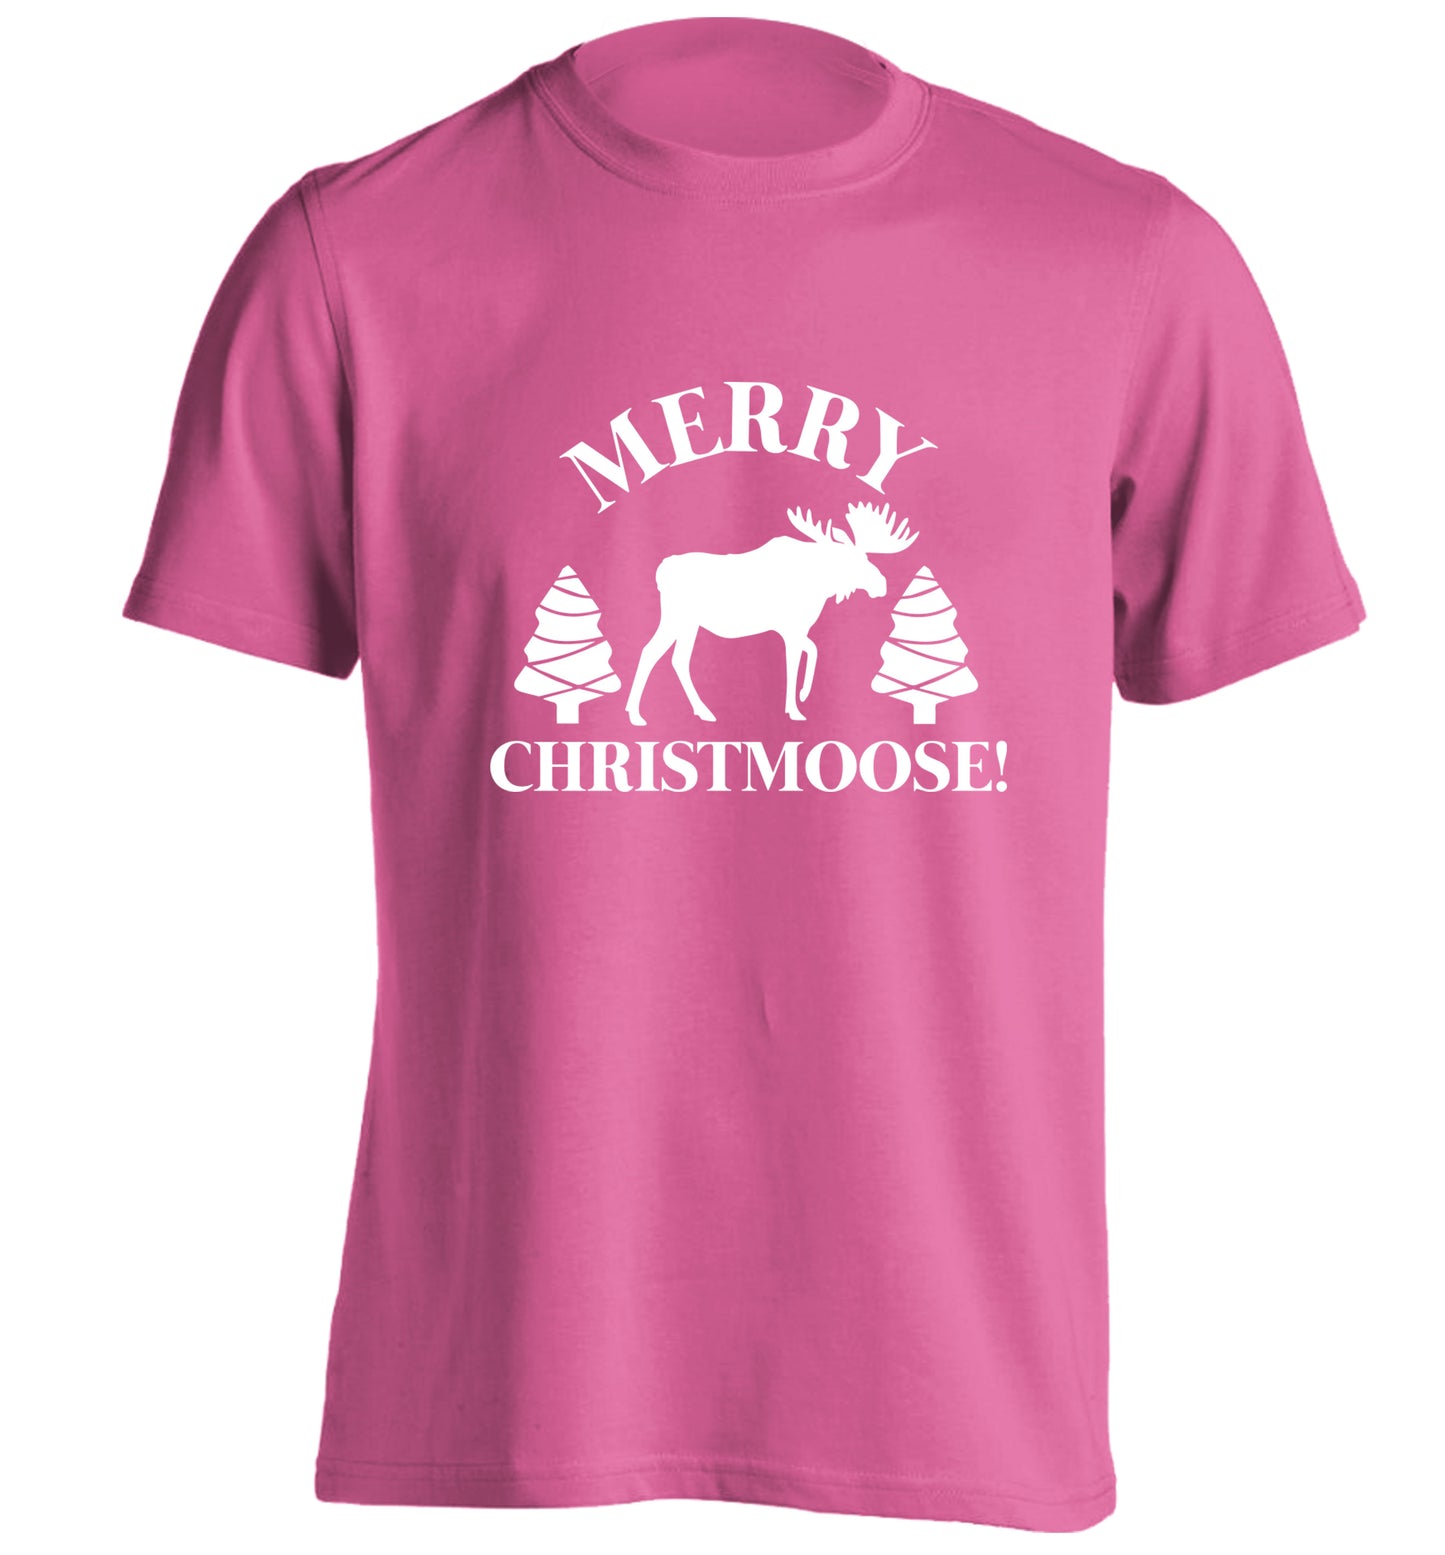 Merry Christmoose adults unisex pink Tshirt 2XL